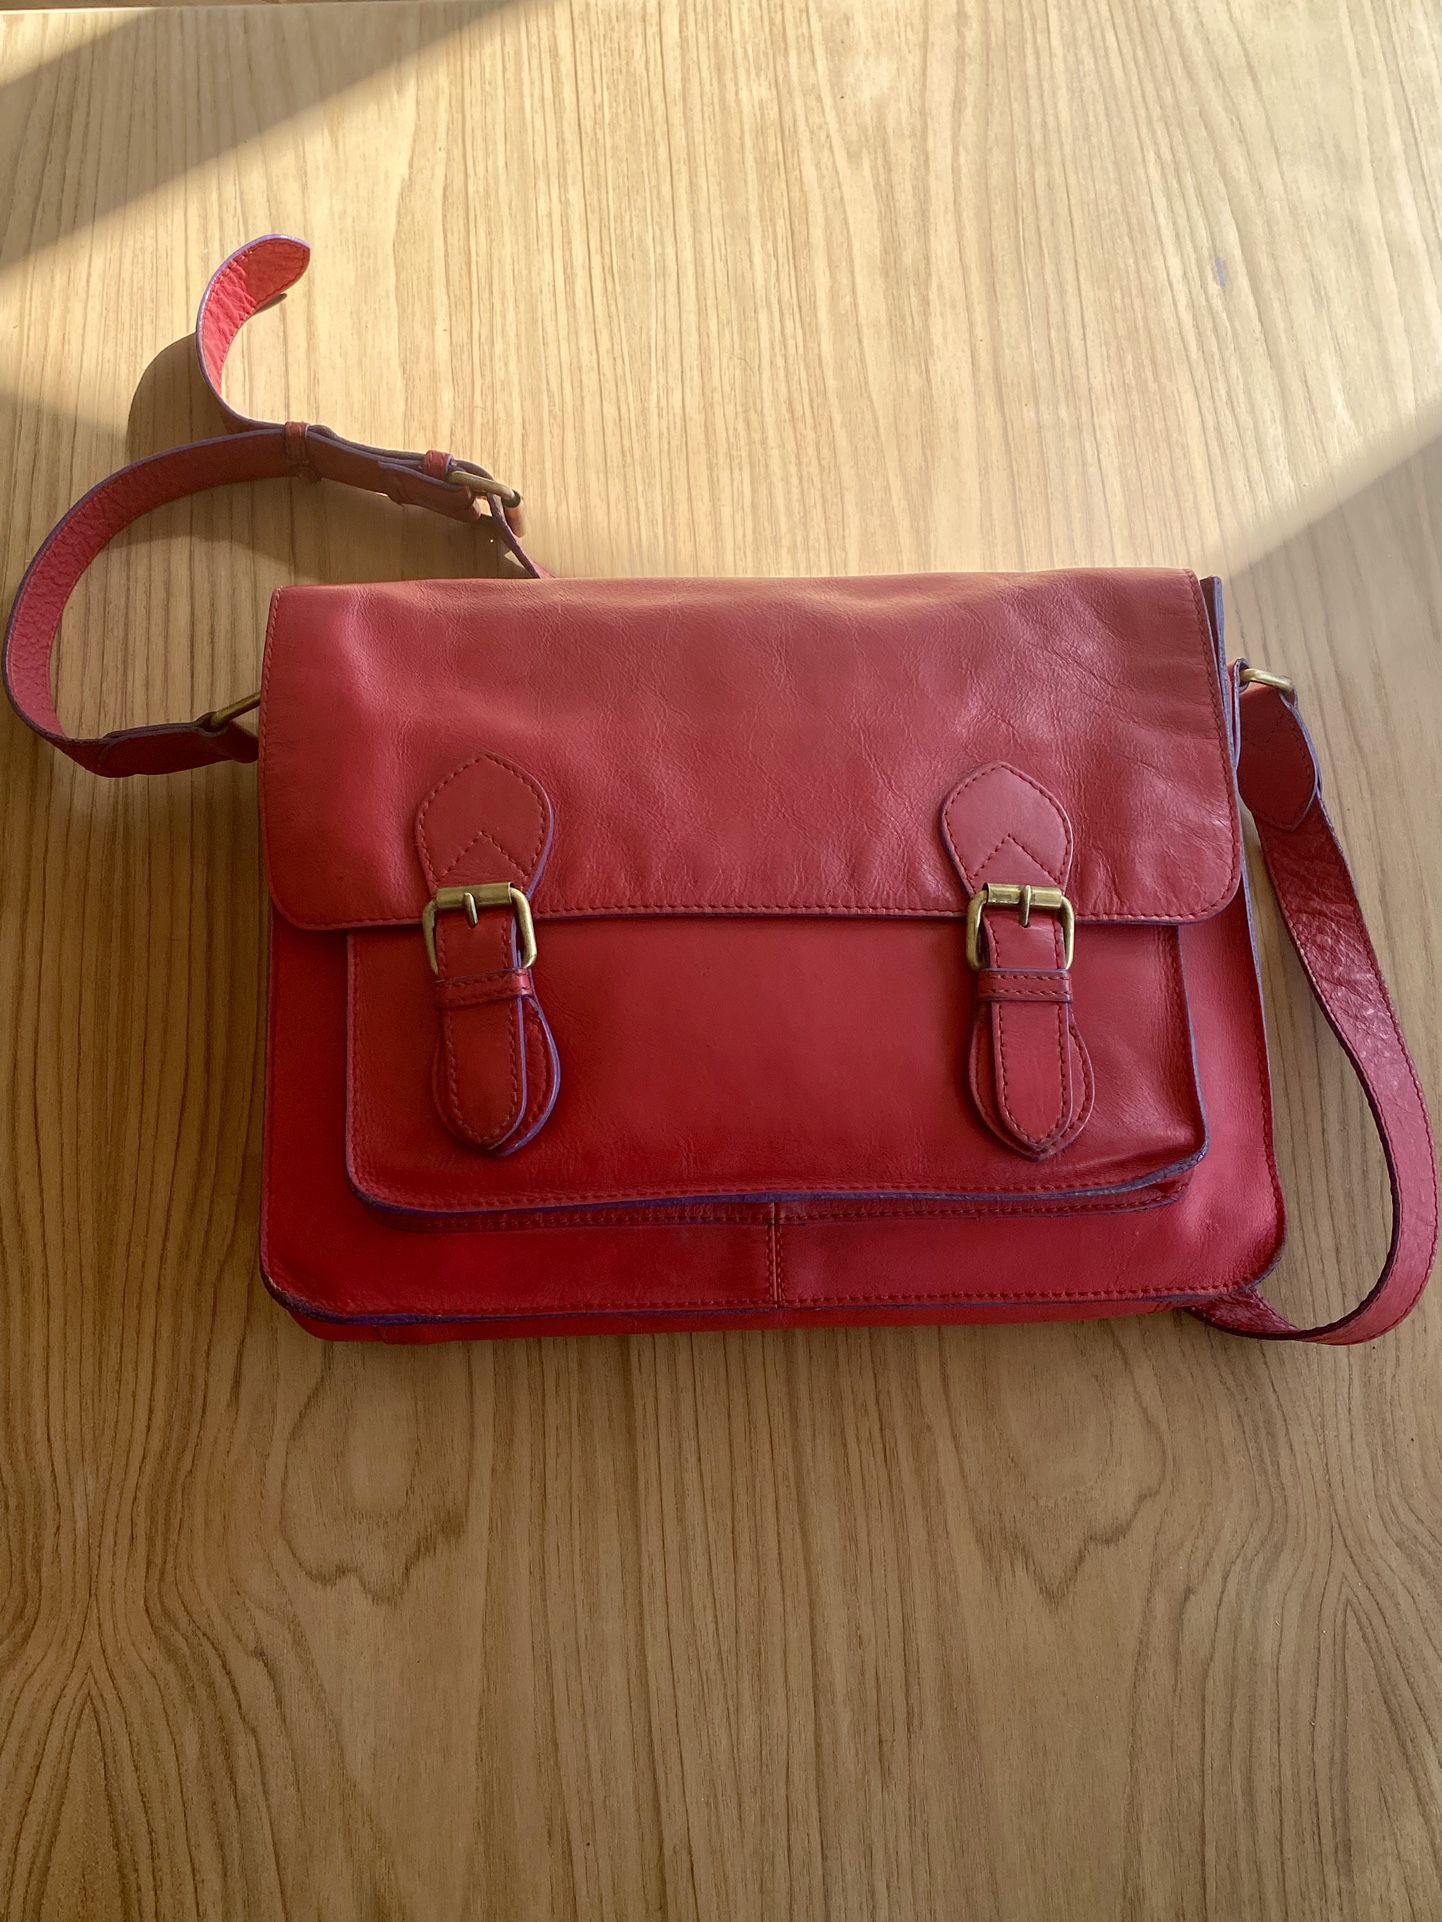 Boden Red Leather Messenger Bag/ Purse